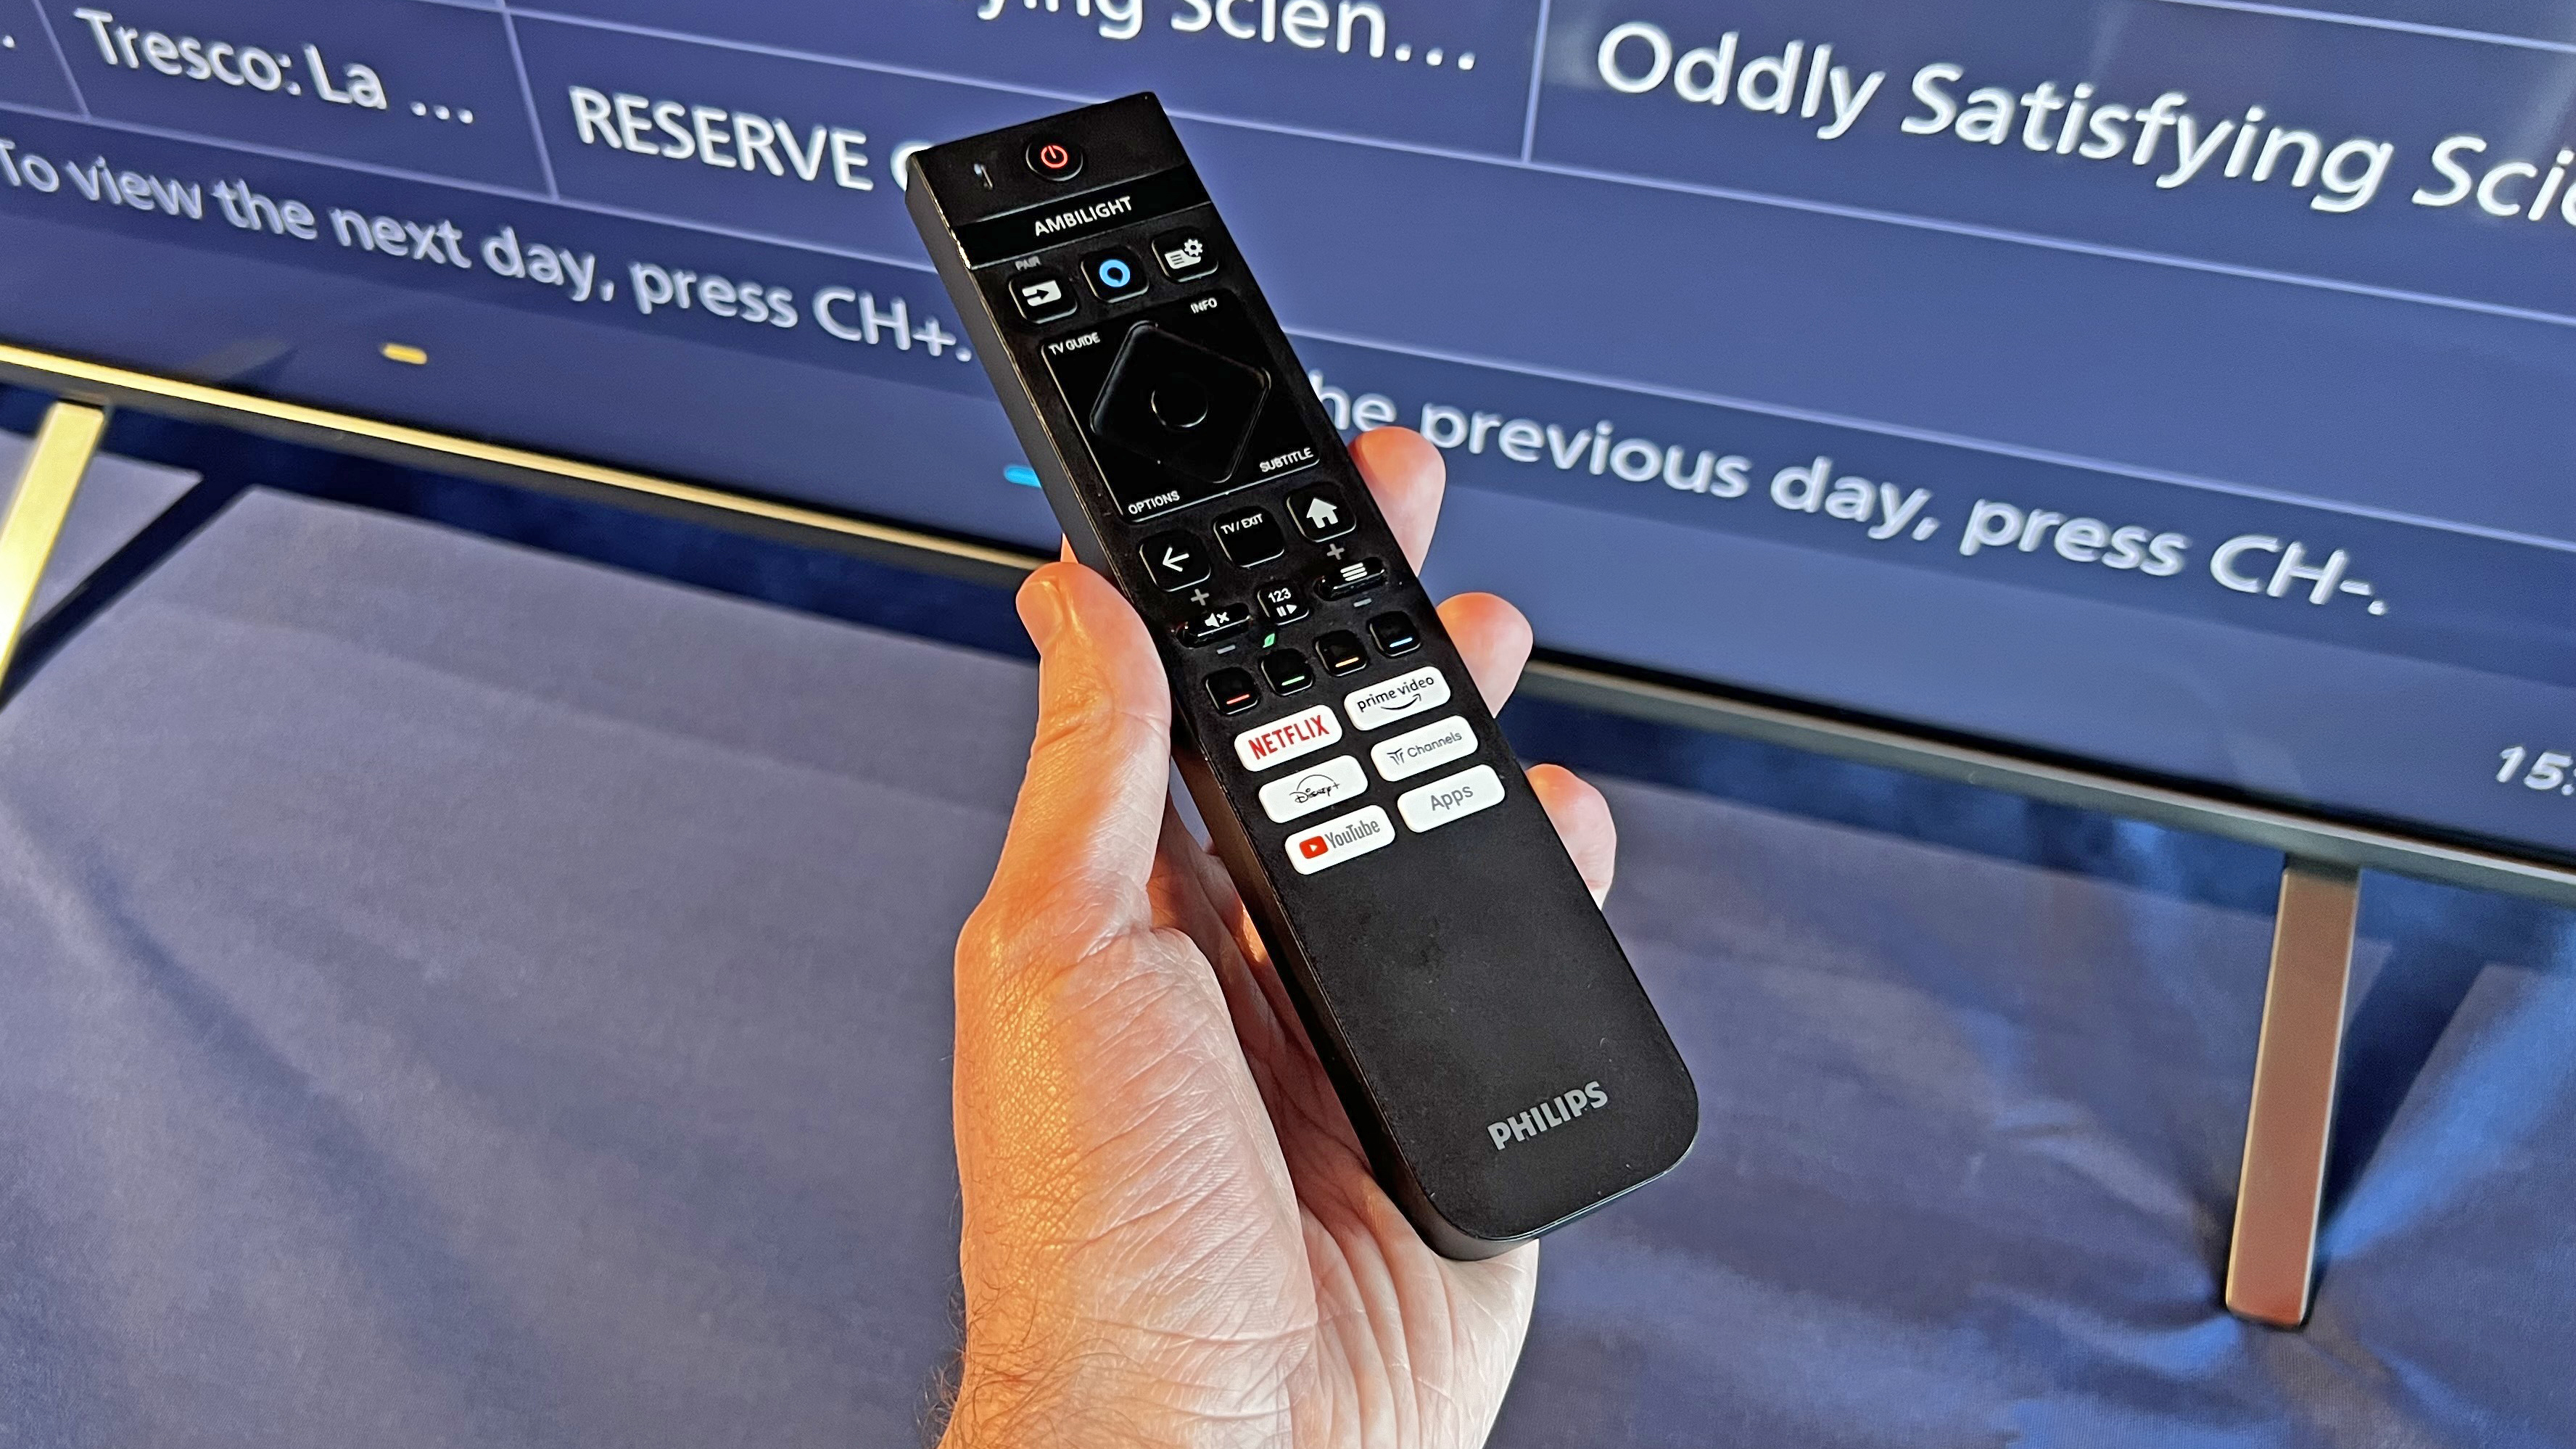 Titan smart TV OS remote control